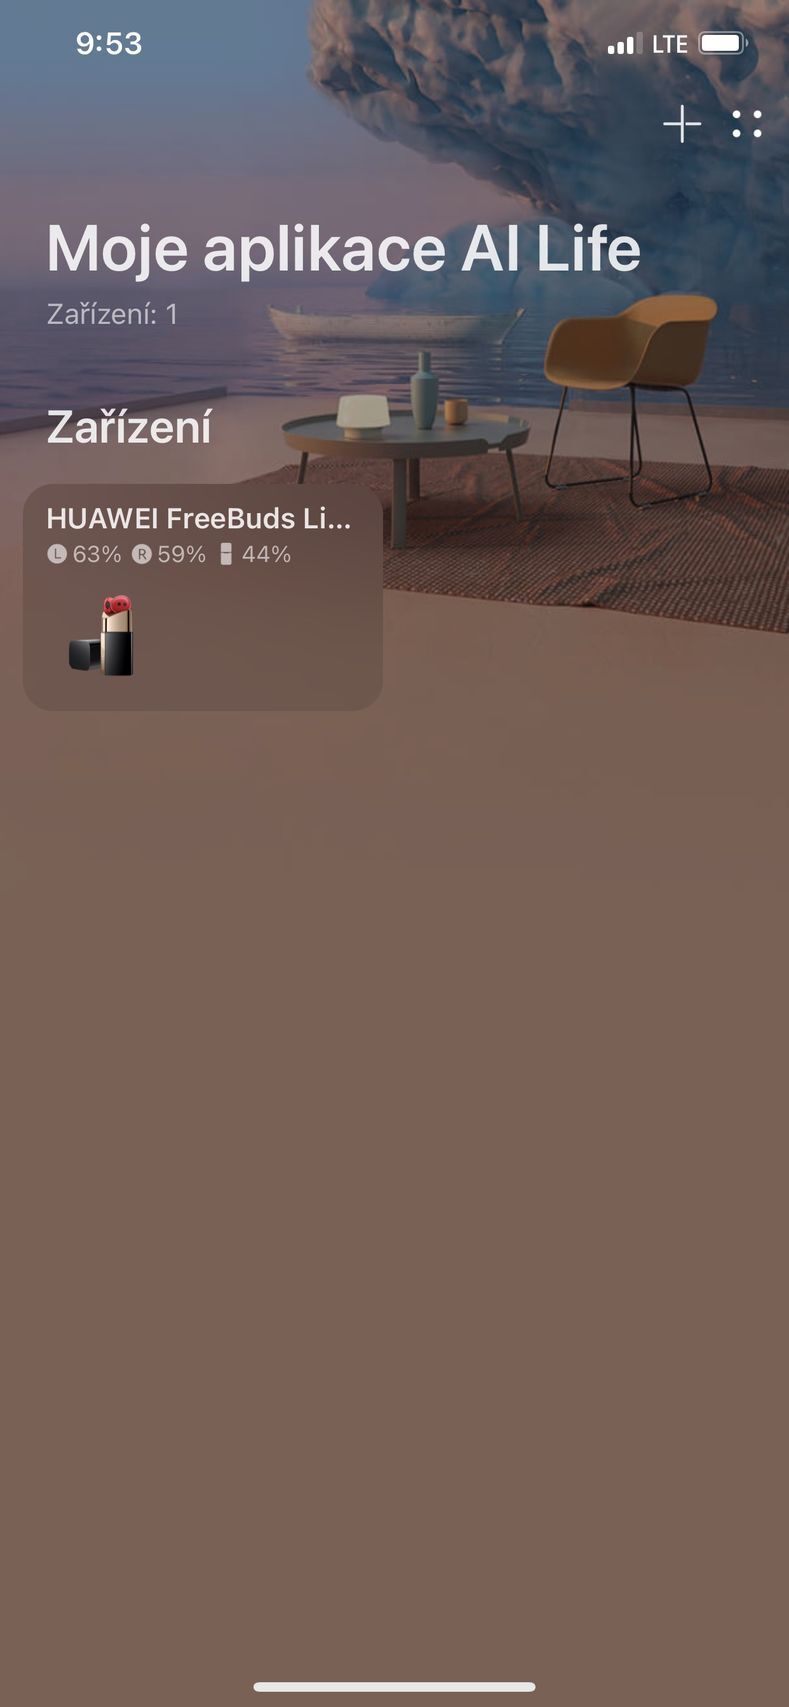 Huawei Al Life